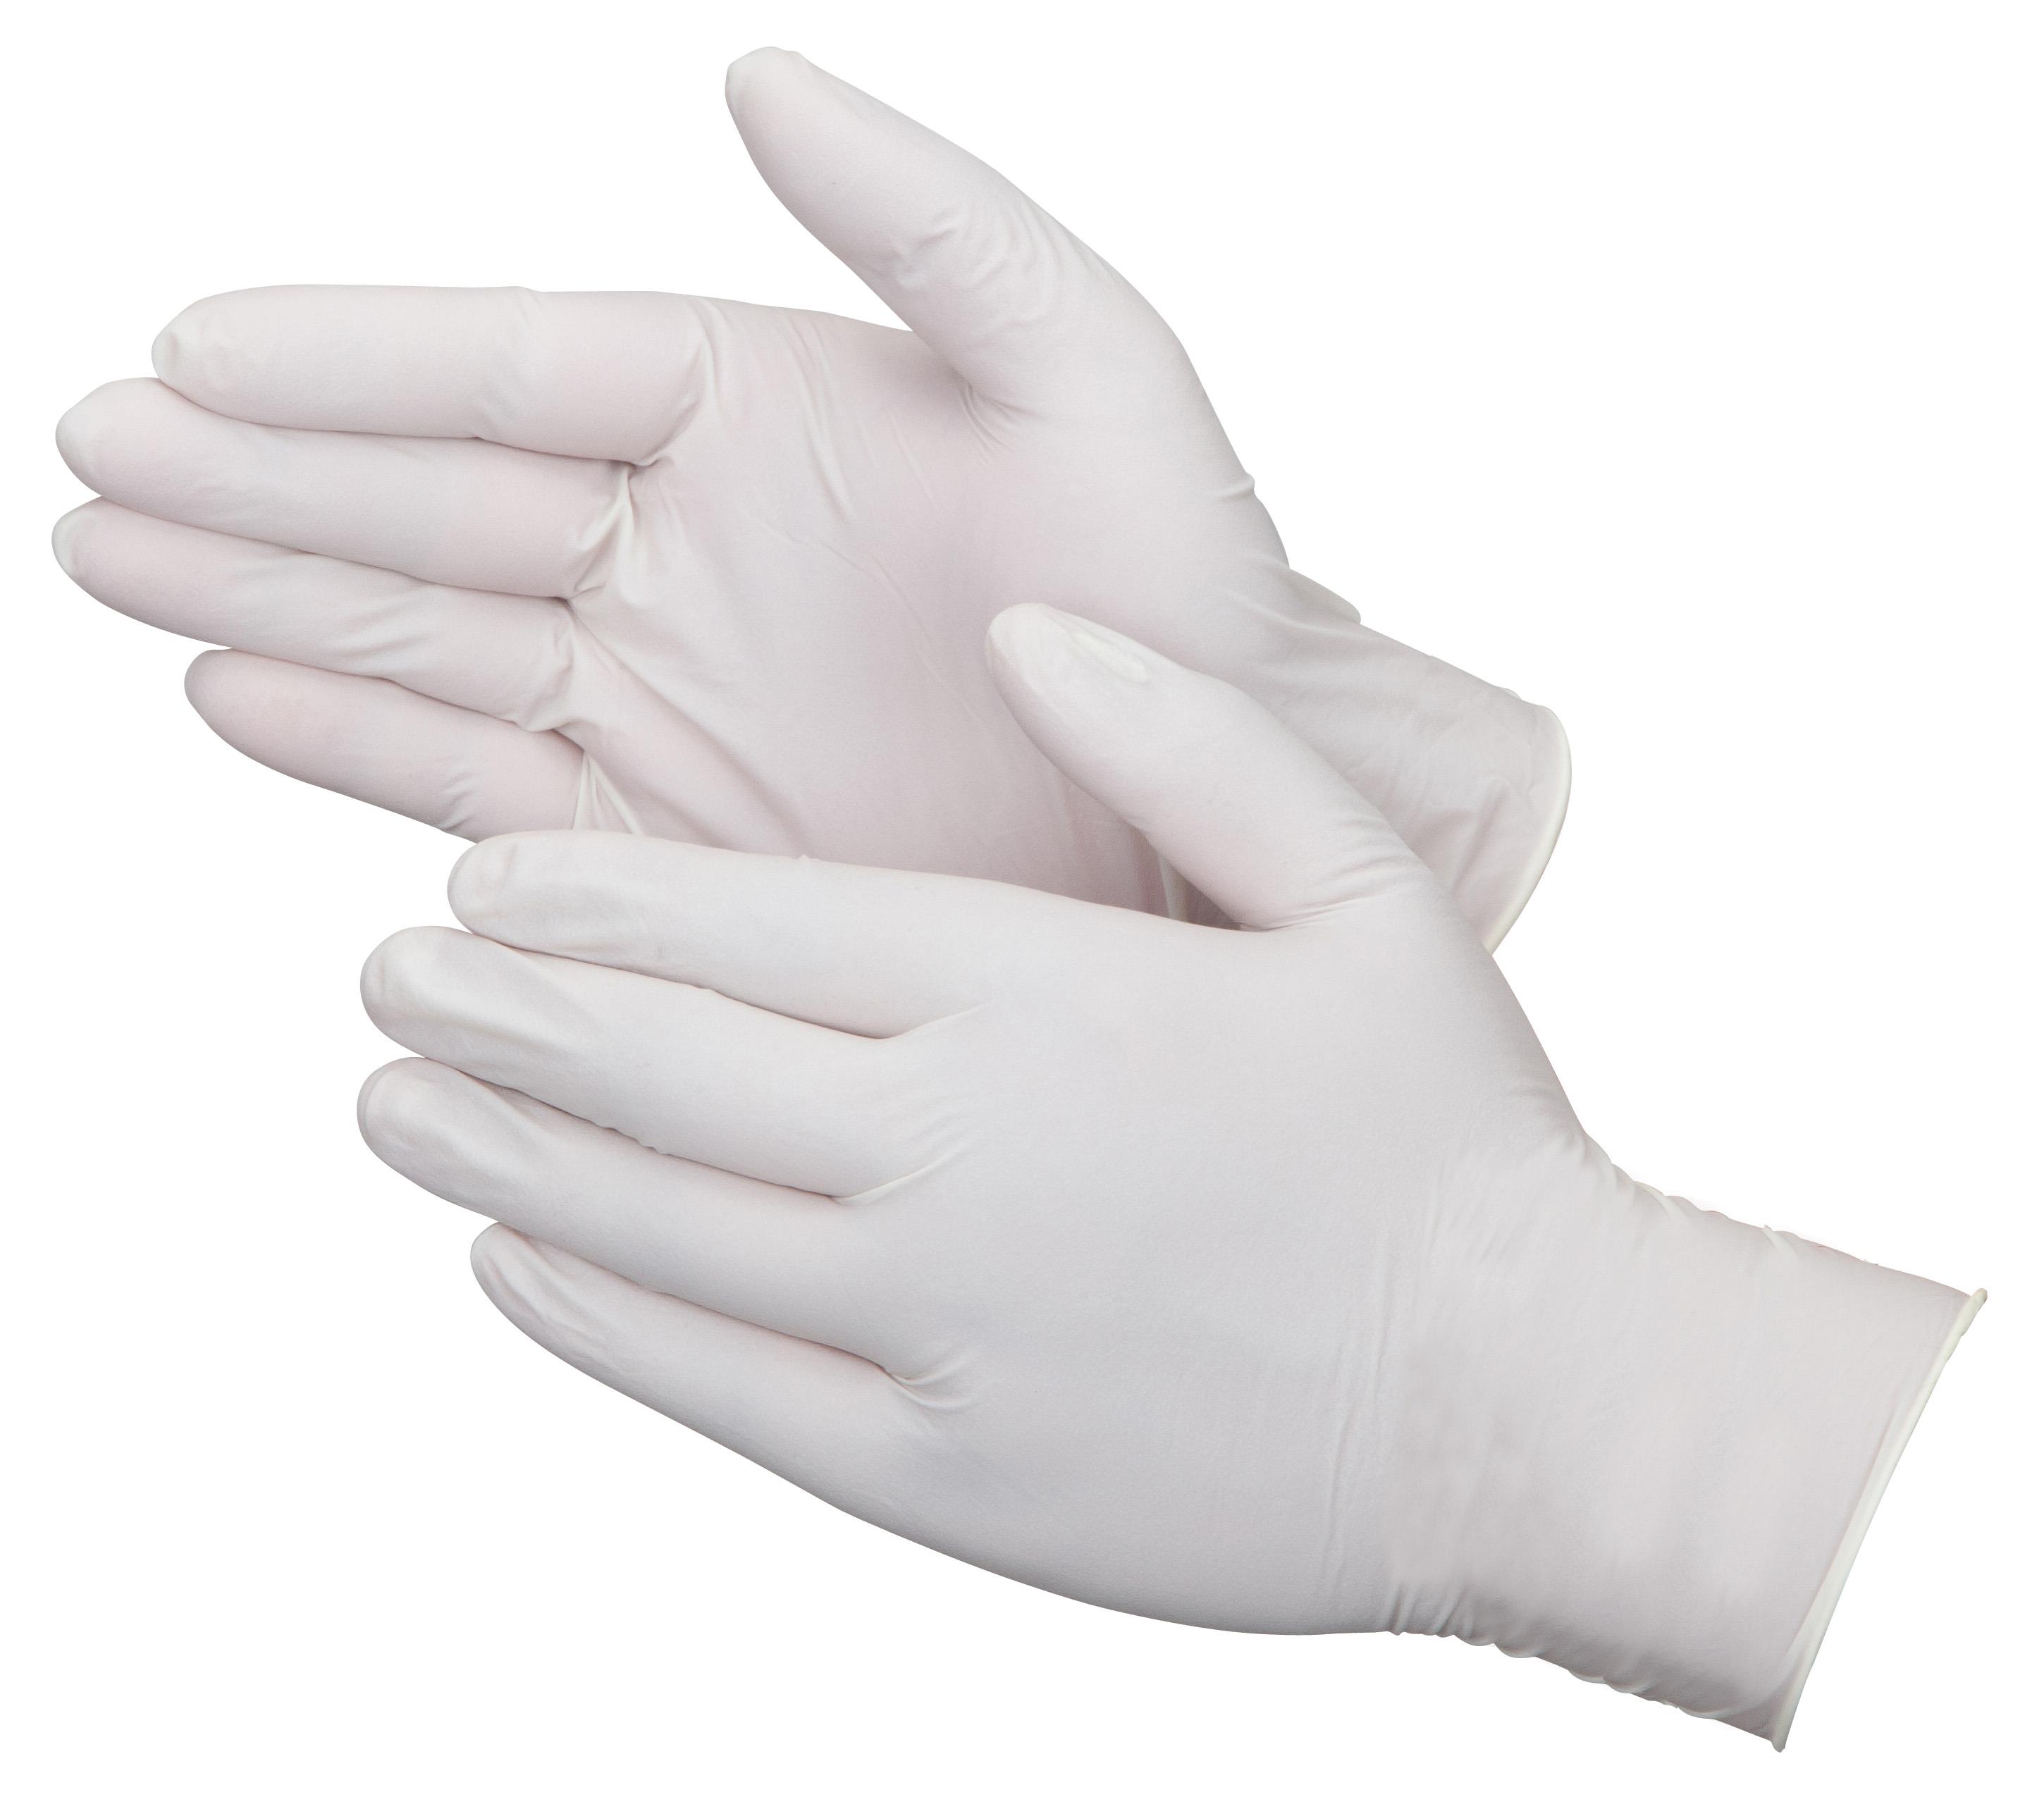 BIOSKIN 5 MIL POWDER FREE LATEX 100/BX - Disposable Gloves